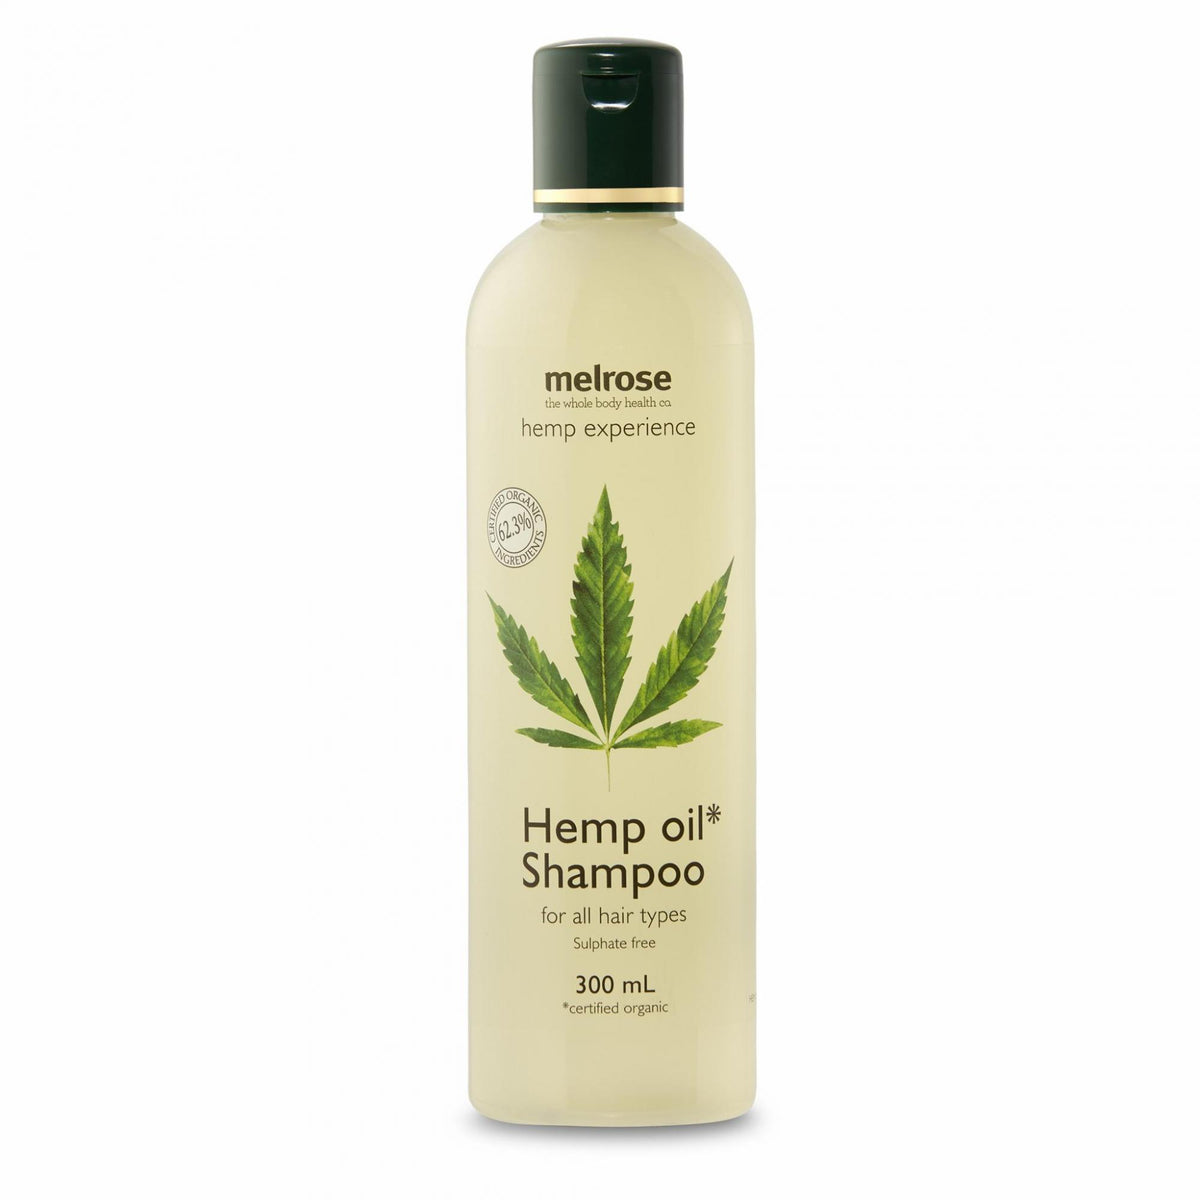 Melrose Hemp Experience Organic Hemp Shampoo